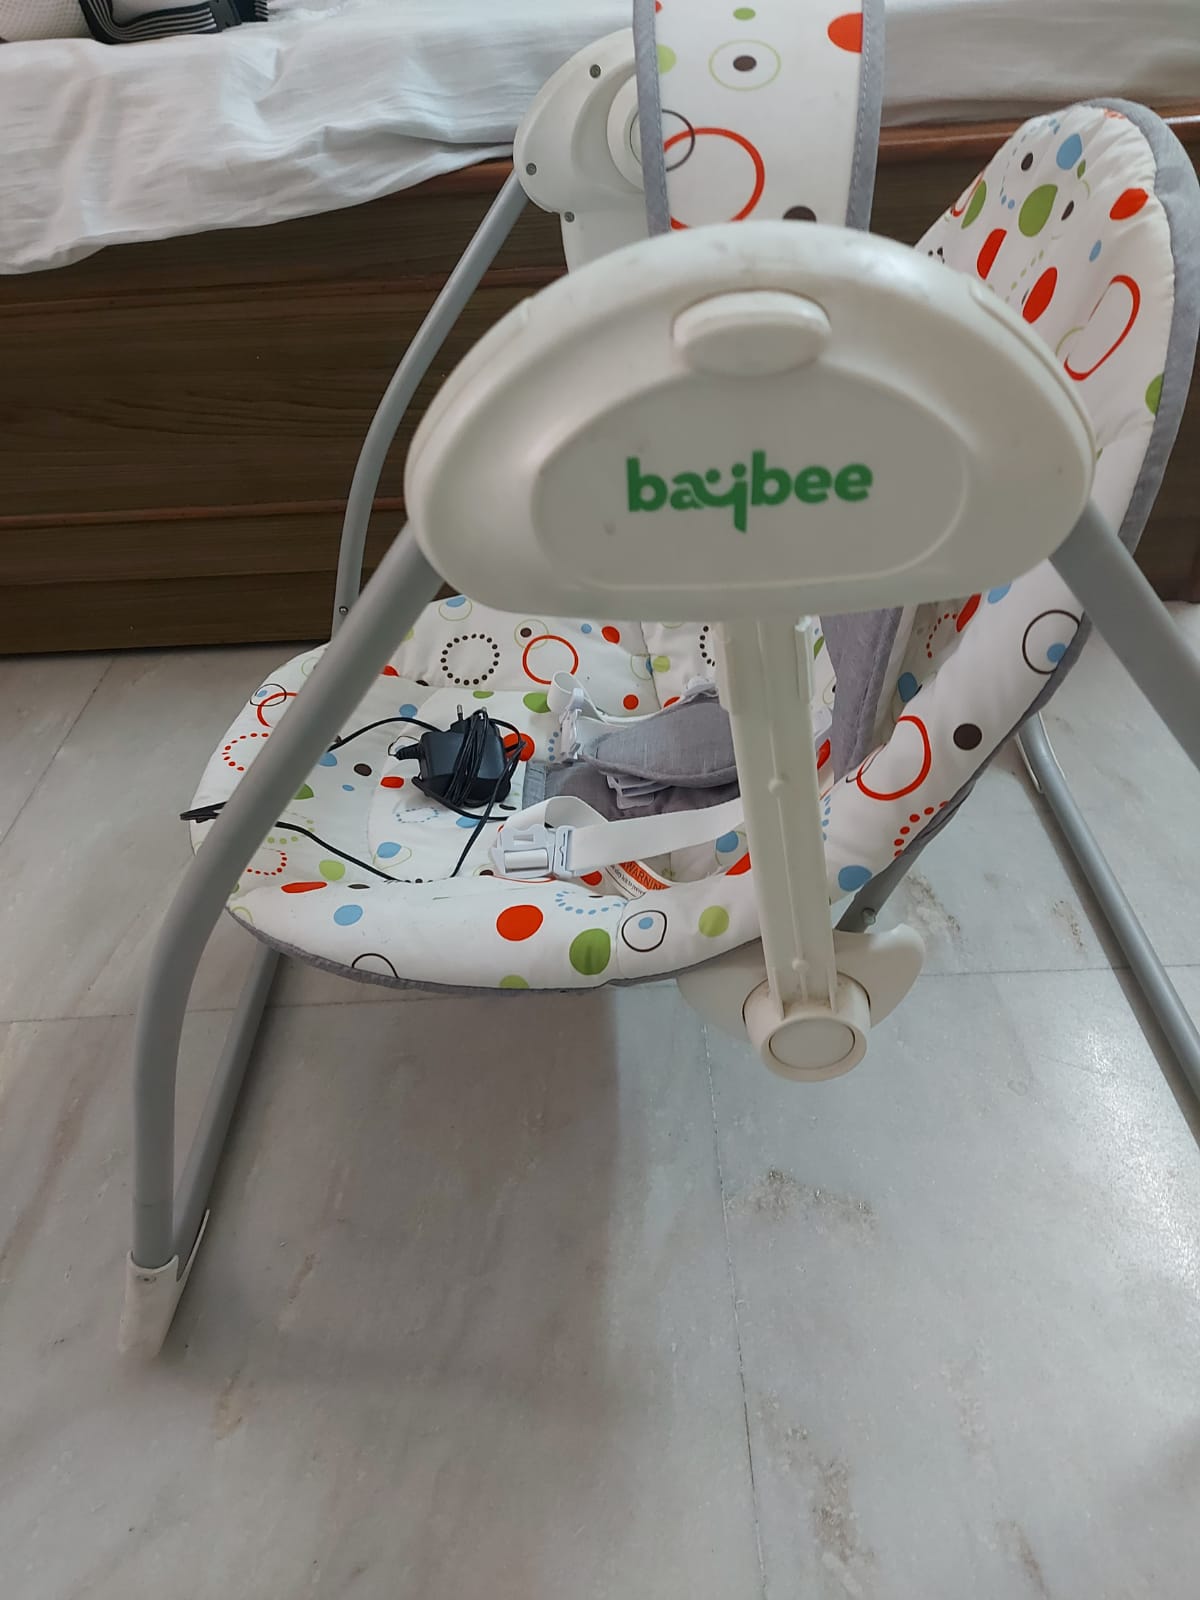 Baybee Automatic Electric Baby Swing electric cradle – Baybee India